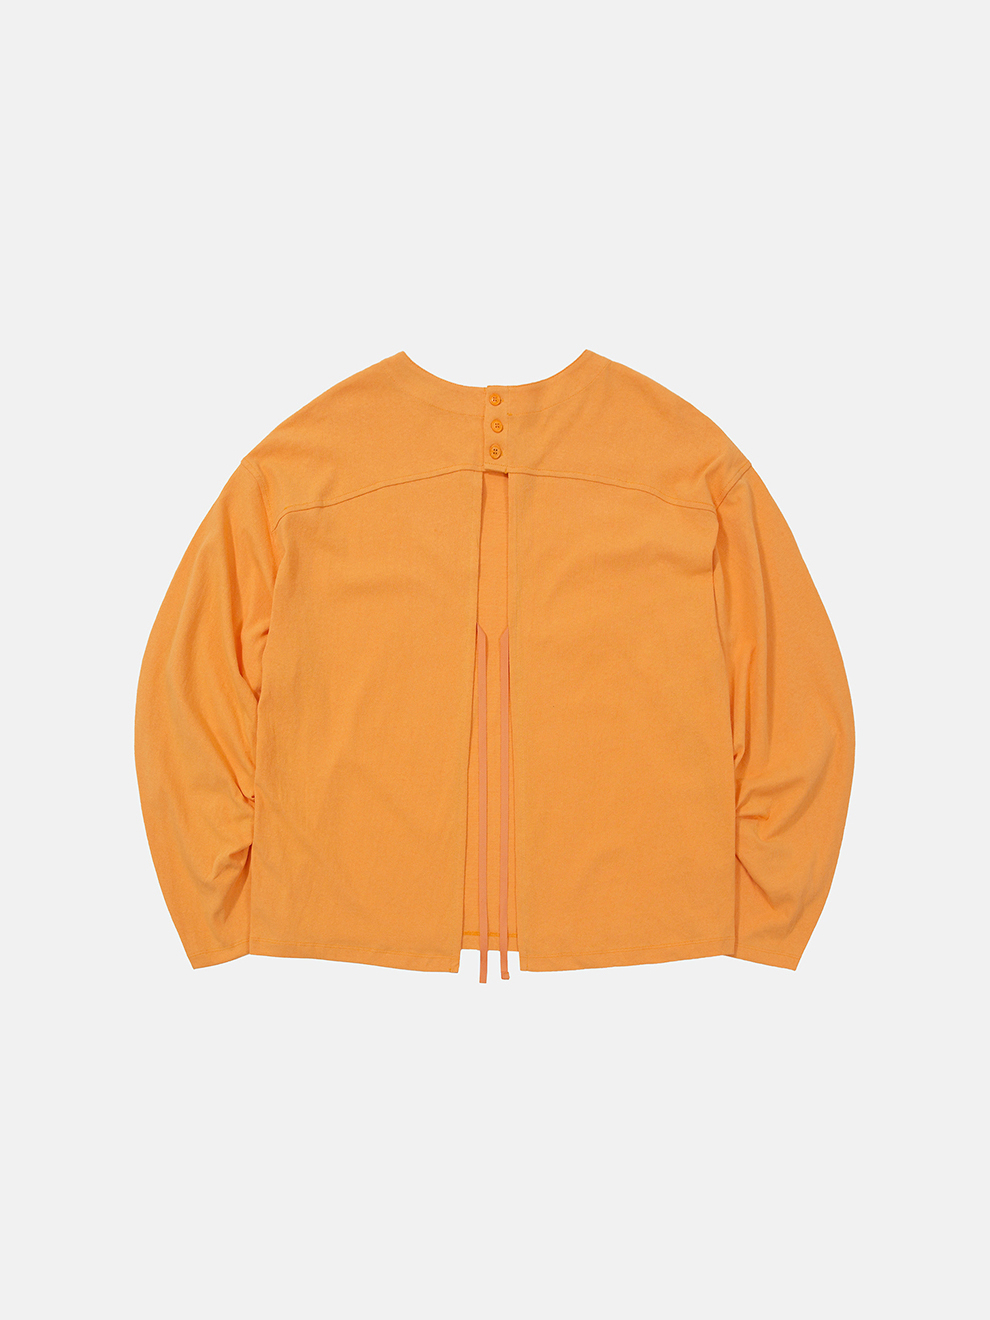 Back Blank Tshirt - Tangerine